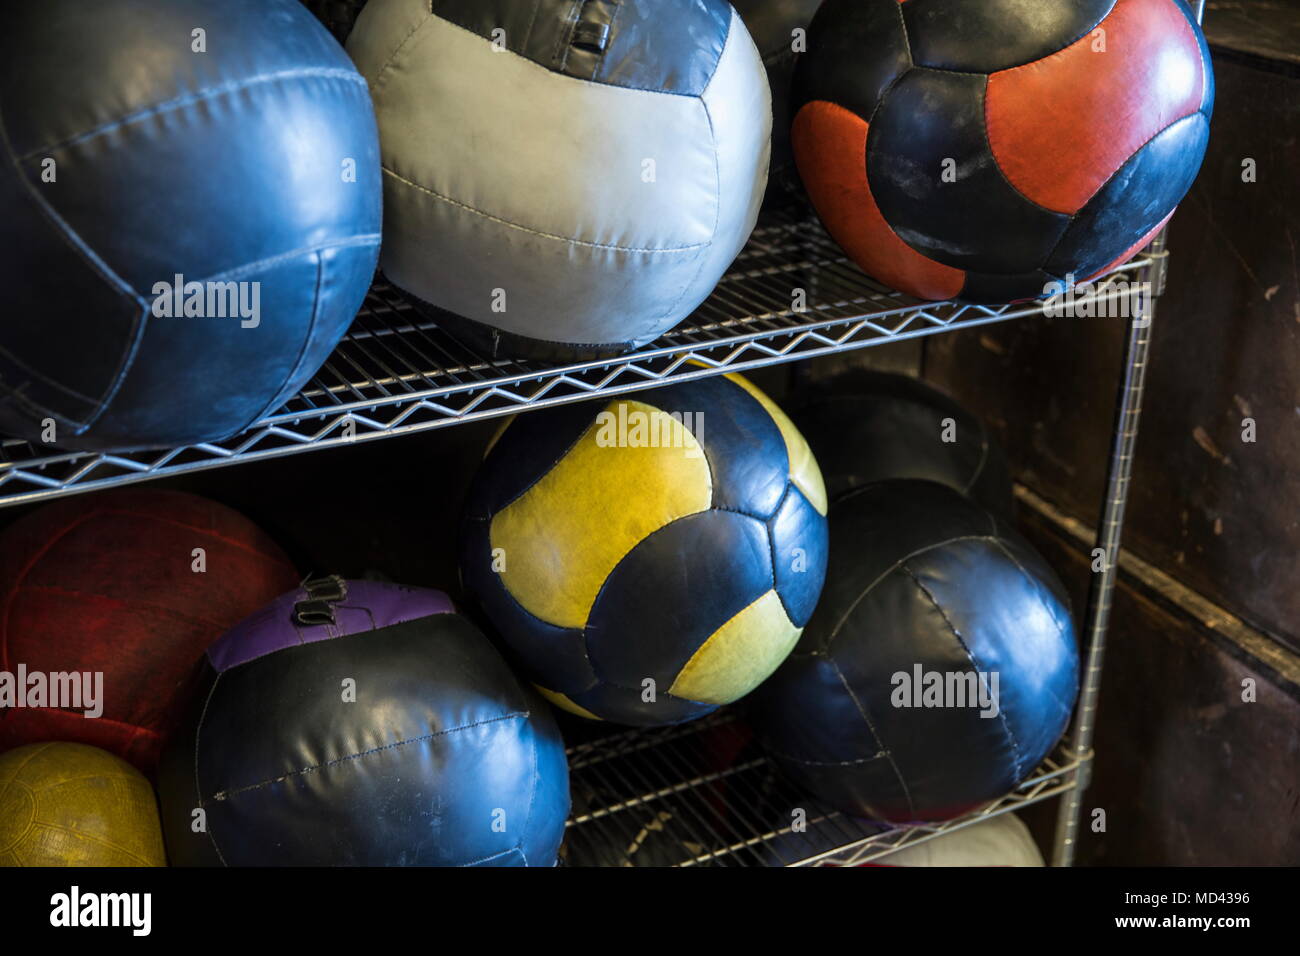 Medicine balls on metal shelf in gym, close-up Stock Photo